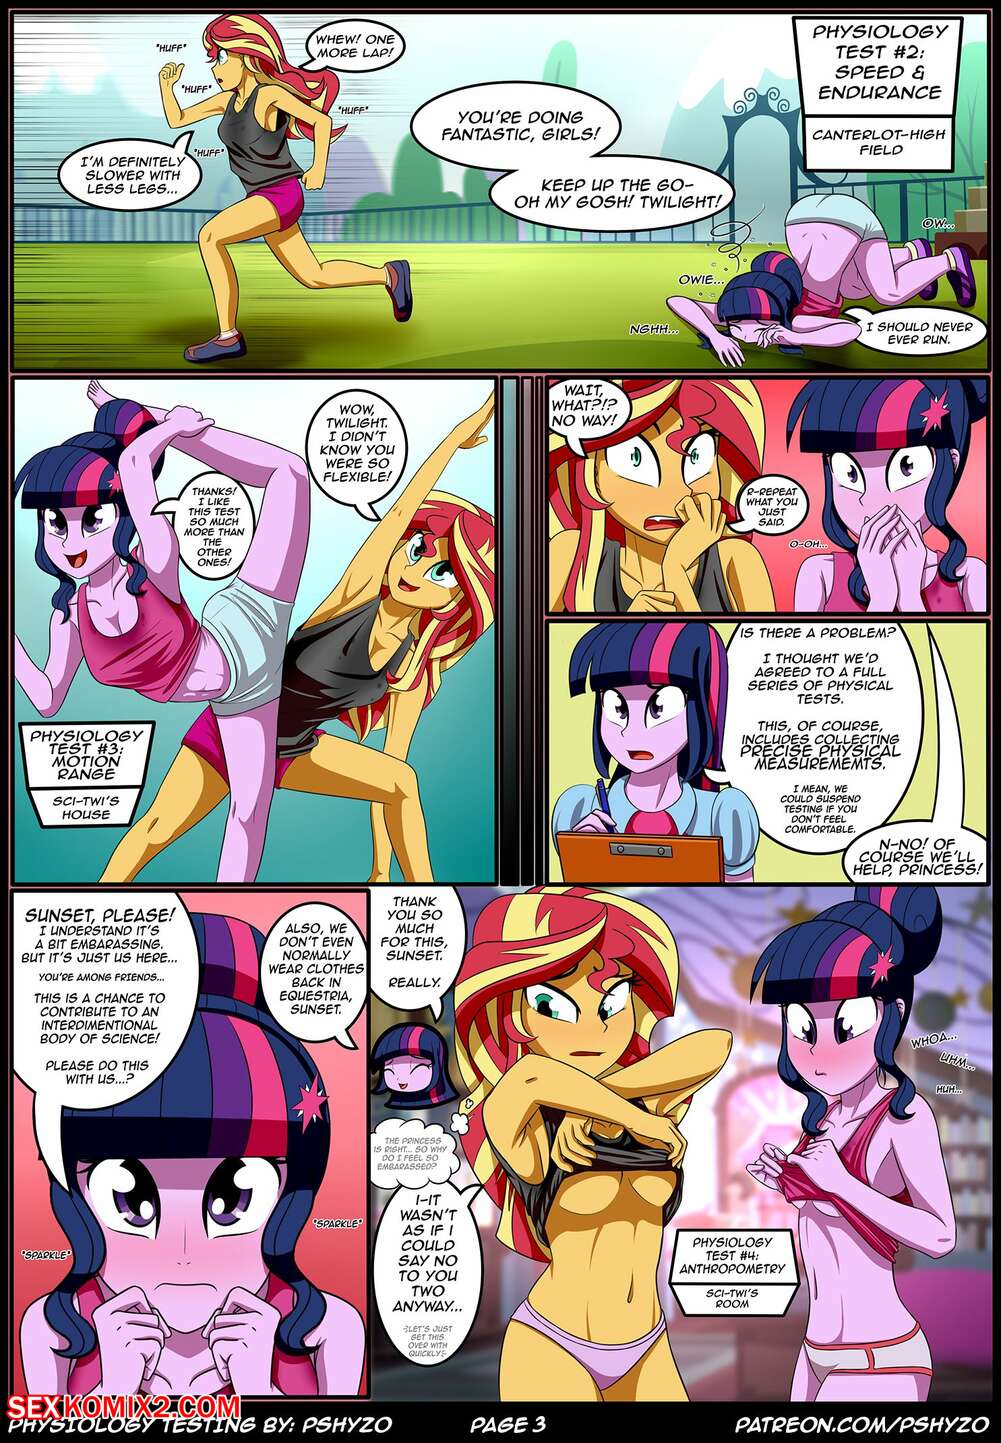 Fondled equestria girls porn comics